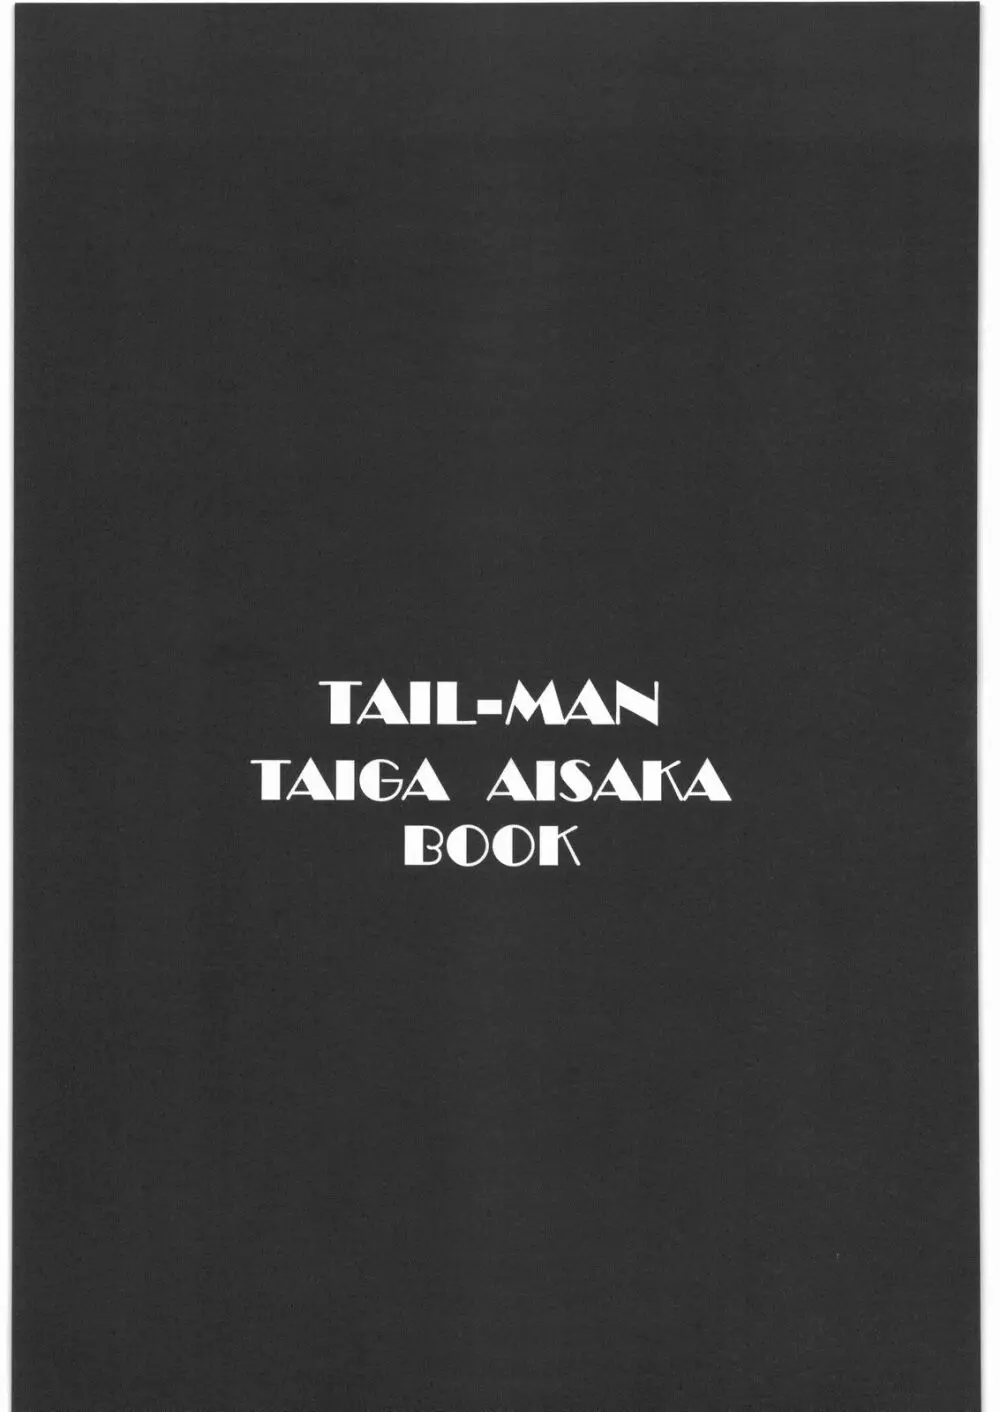 TAIL-MAN TAIGA AISAKA BOOK - page2